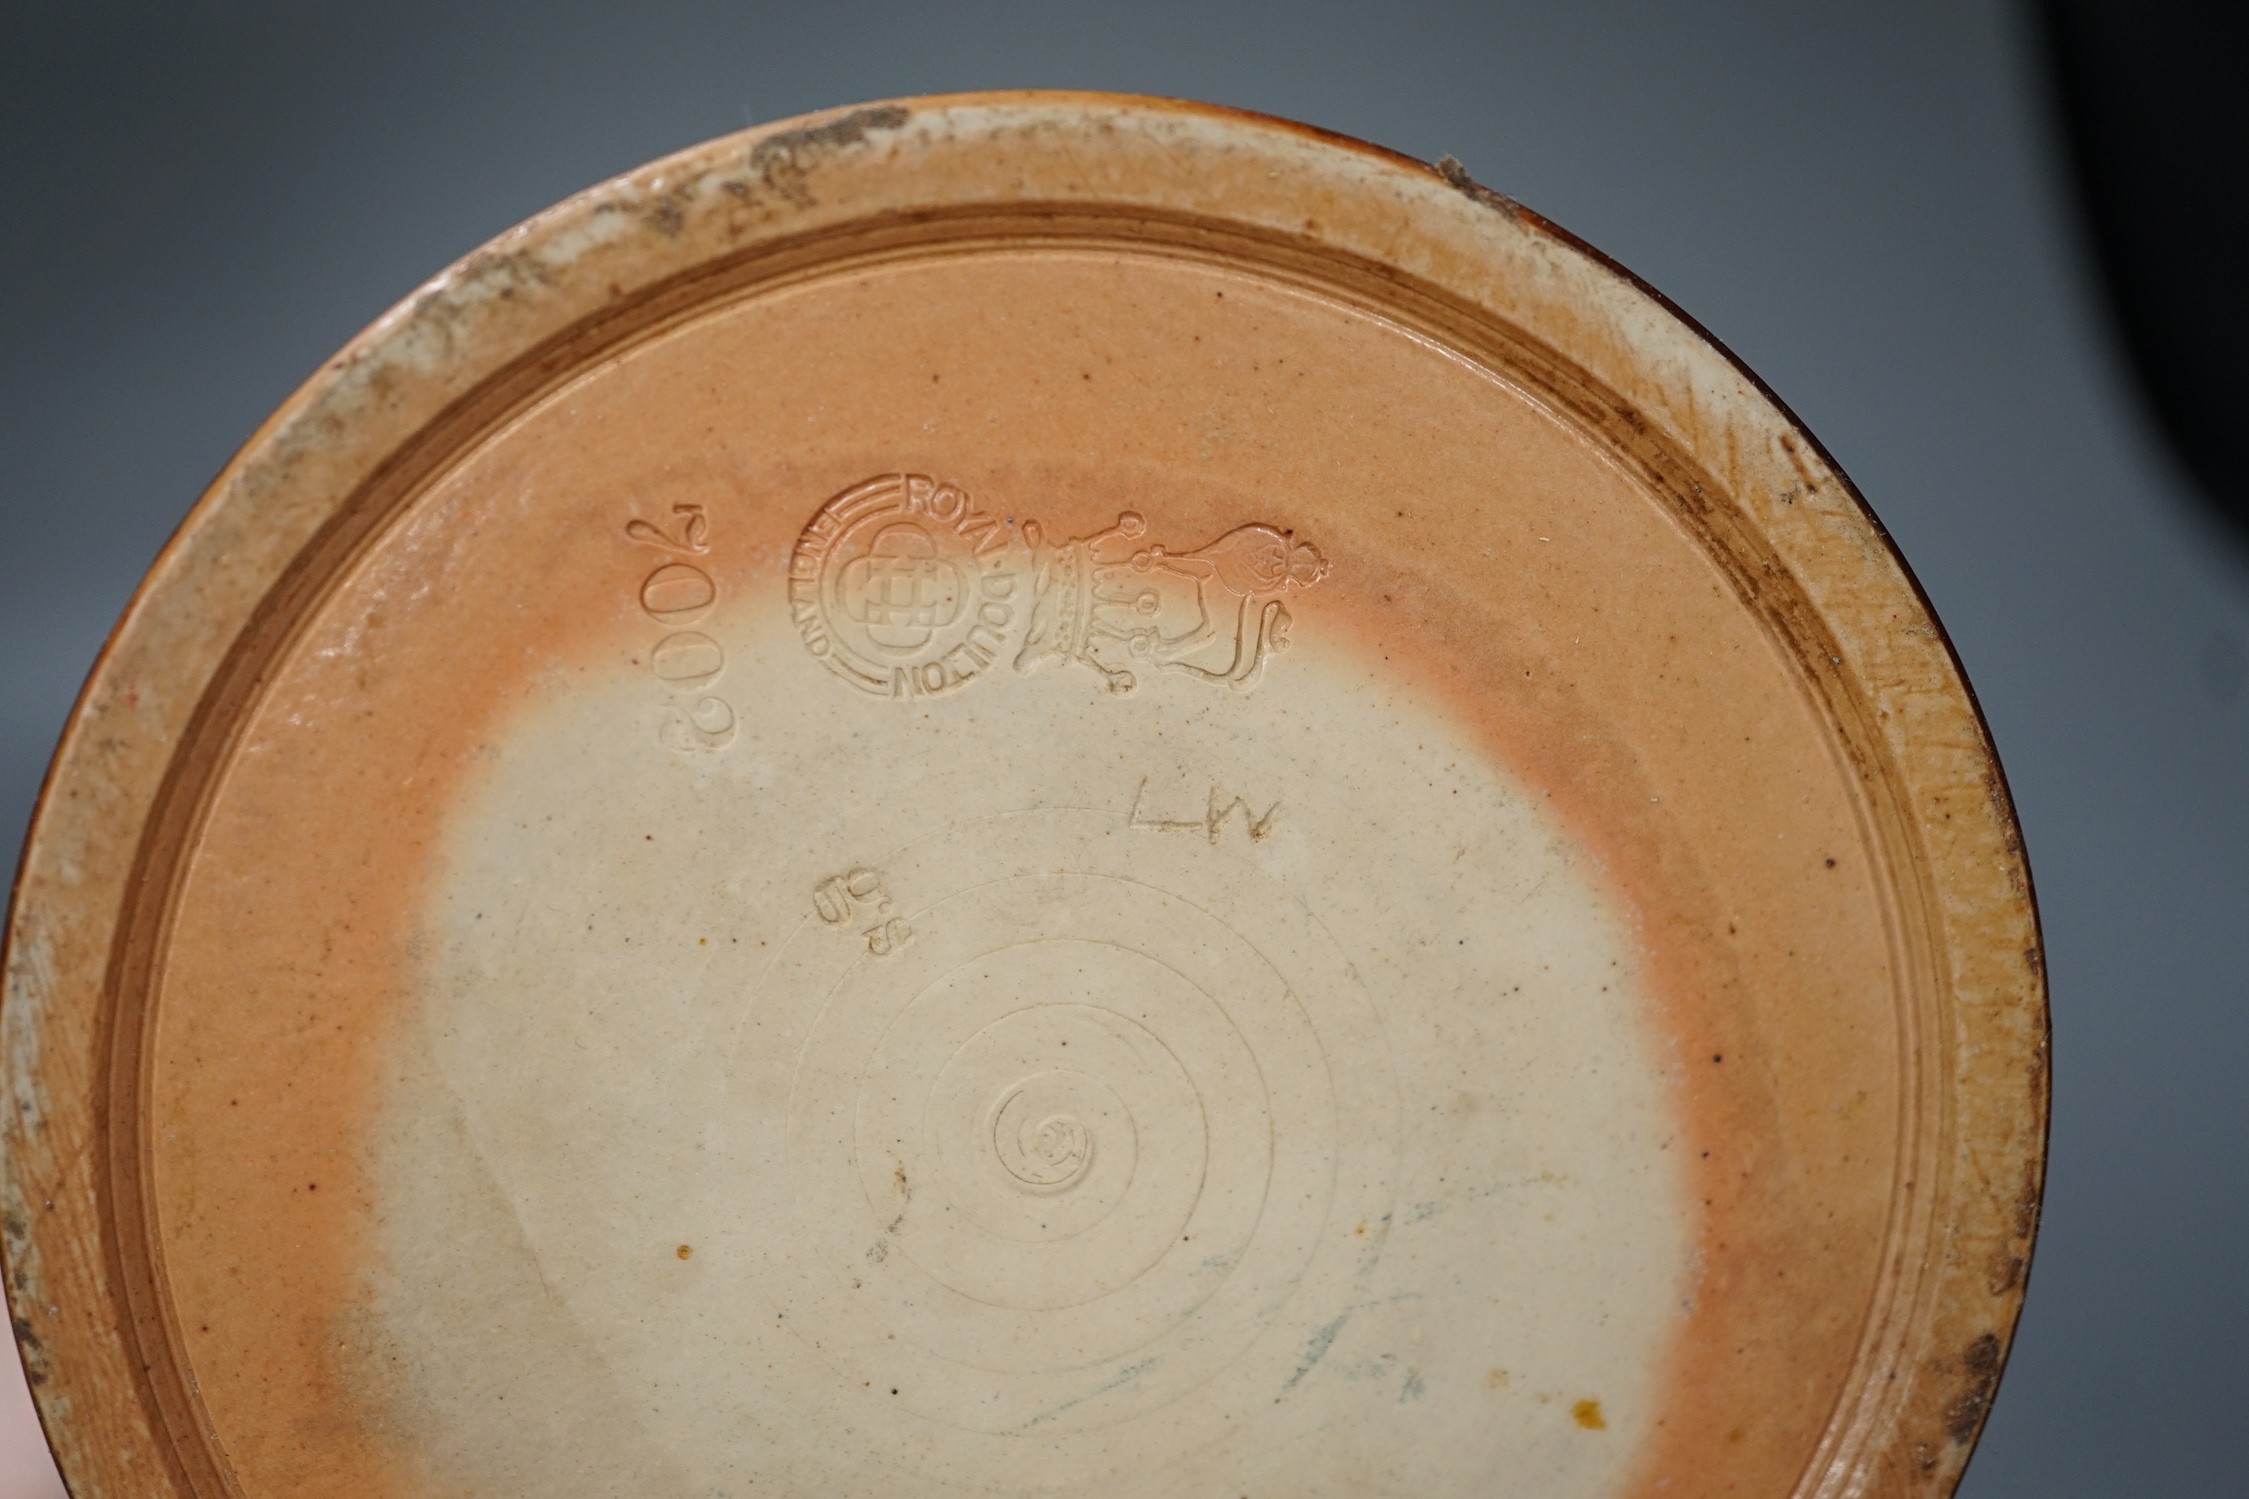 A Royal Doulton stoneware ‘UNC. BORIC.’ drug jar 18cm and a Doulton Slater’s patent flagon, 33cm